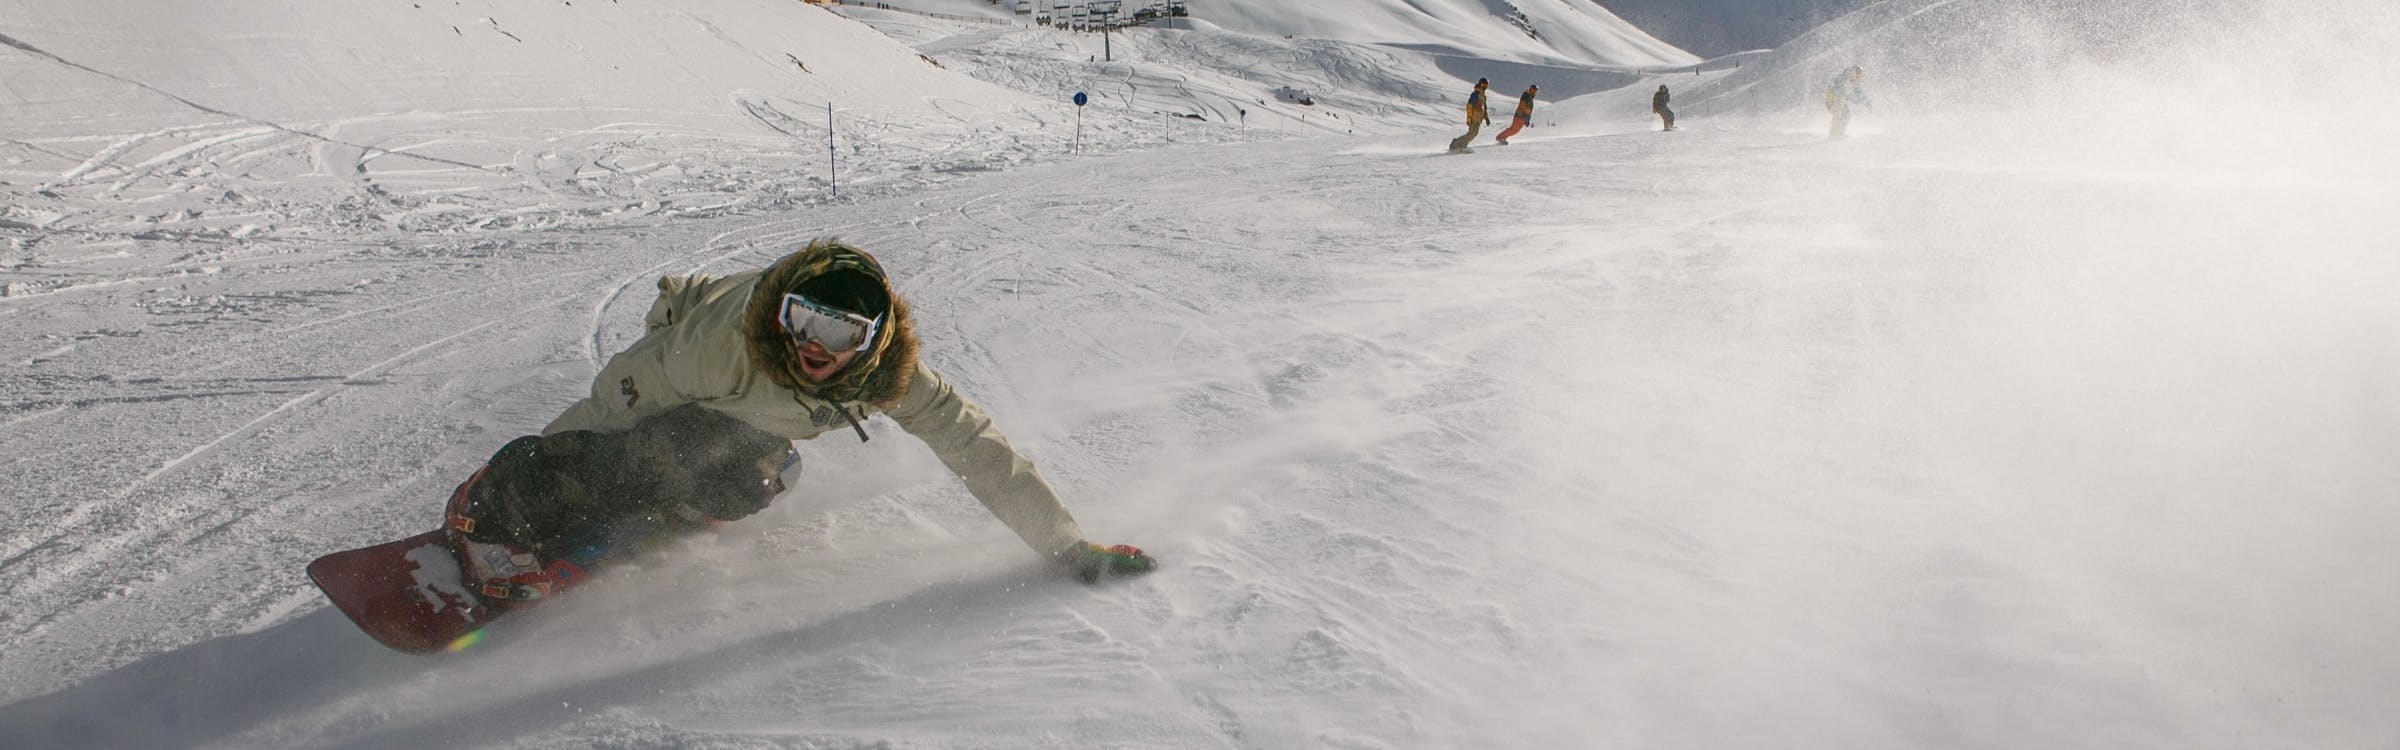 A snowboarder turns down a ski run. 